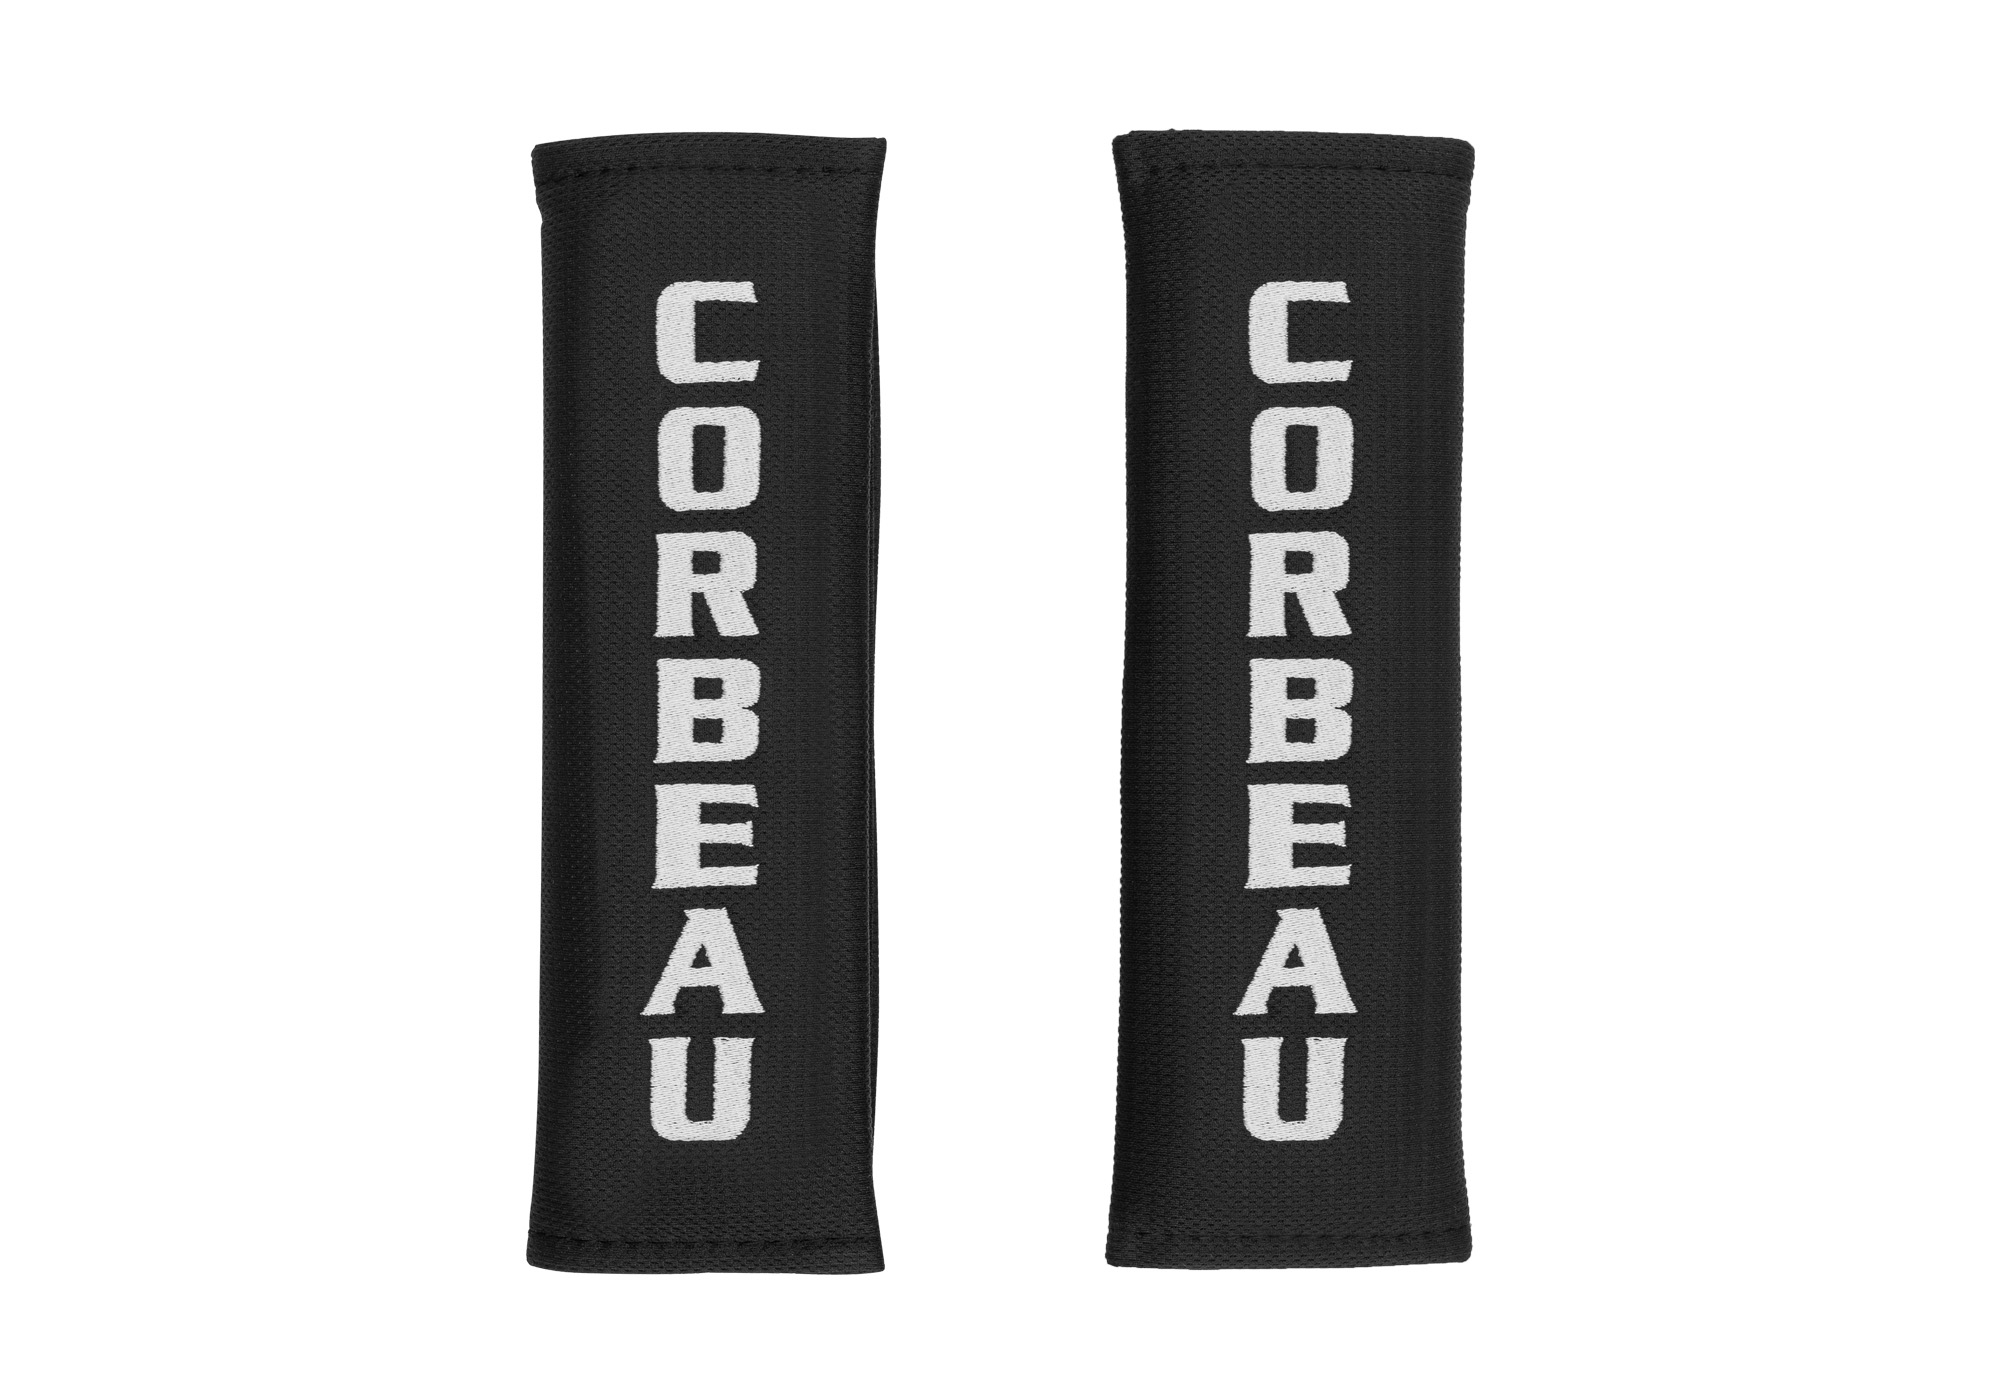 Corbeau Racing Harness Pads, Pair of 3" Black Pads, 50501